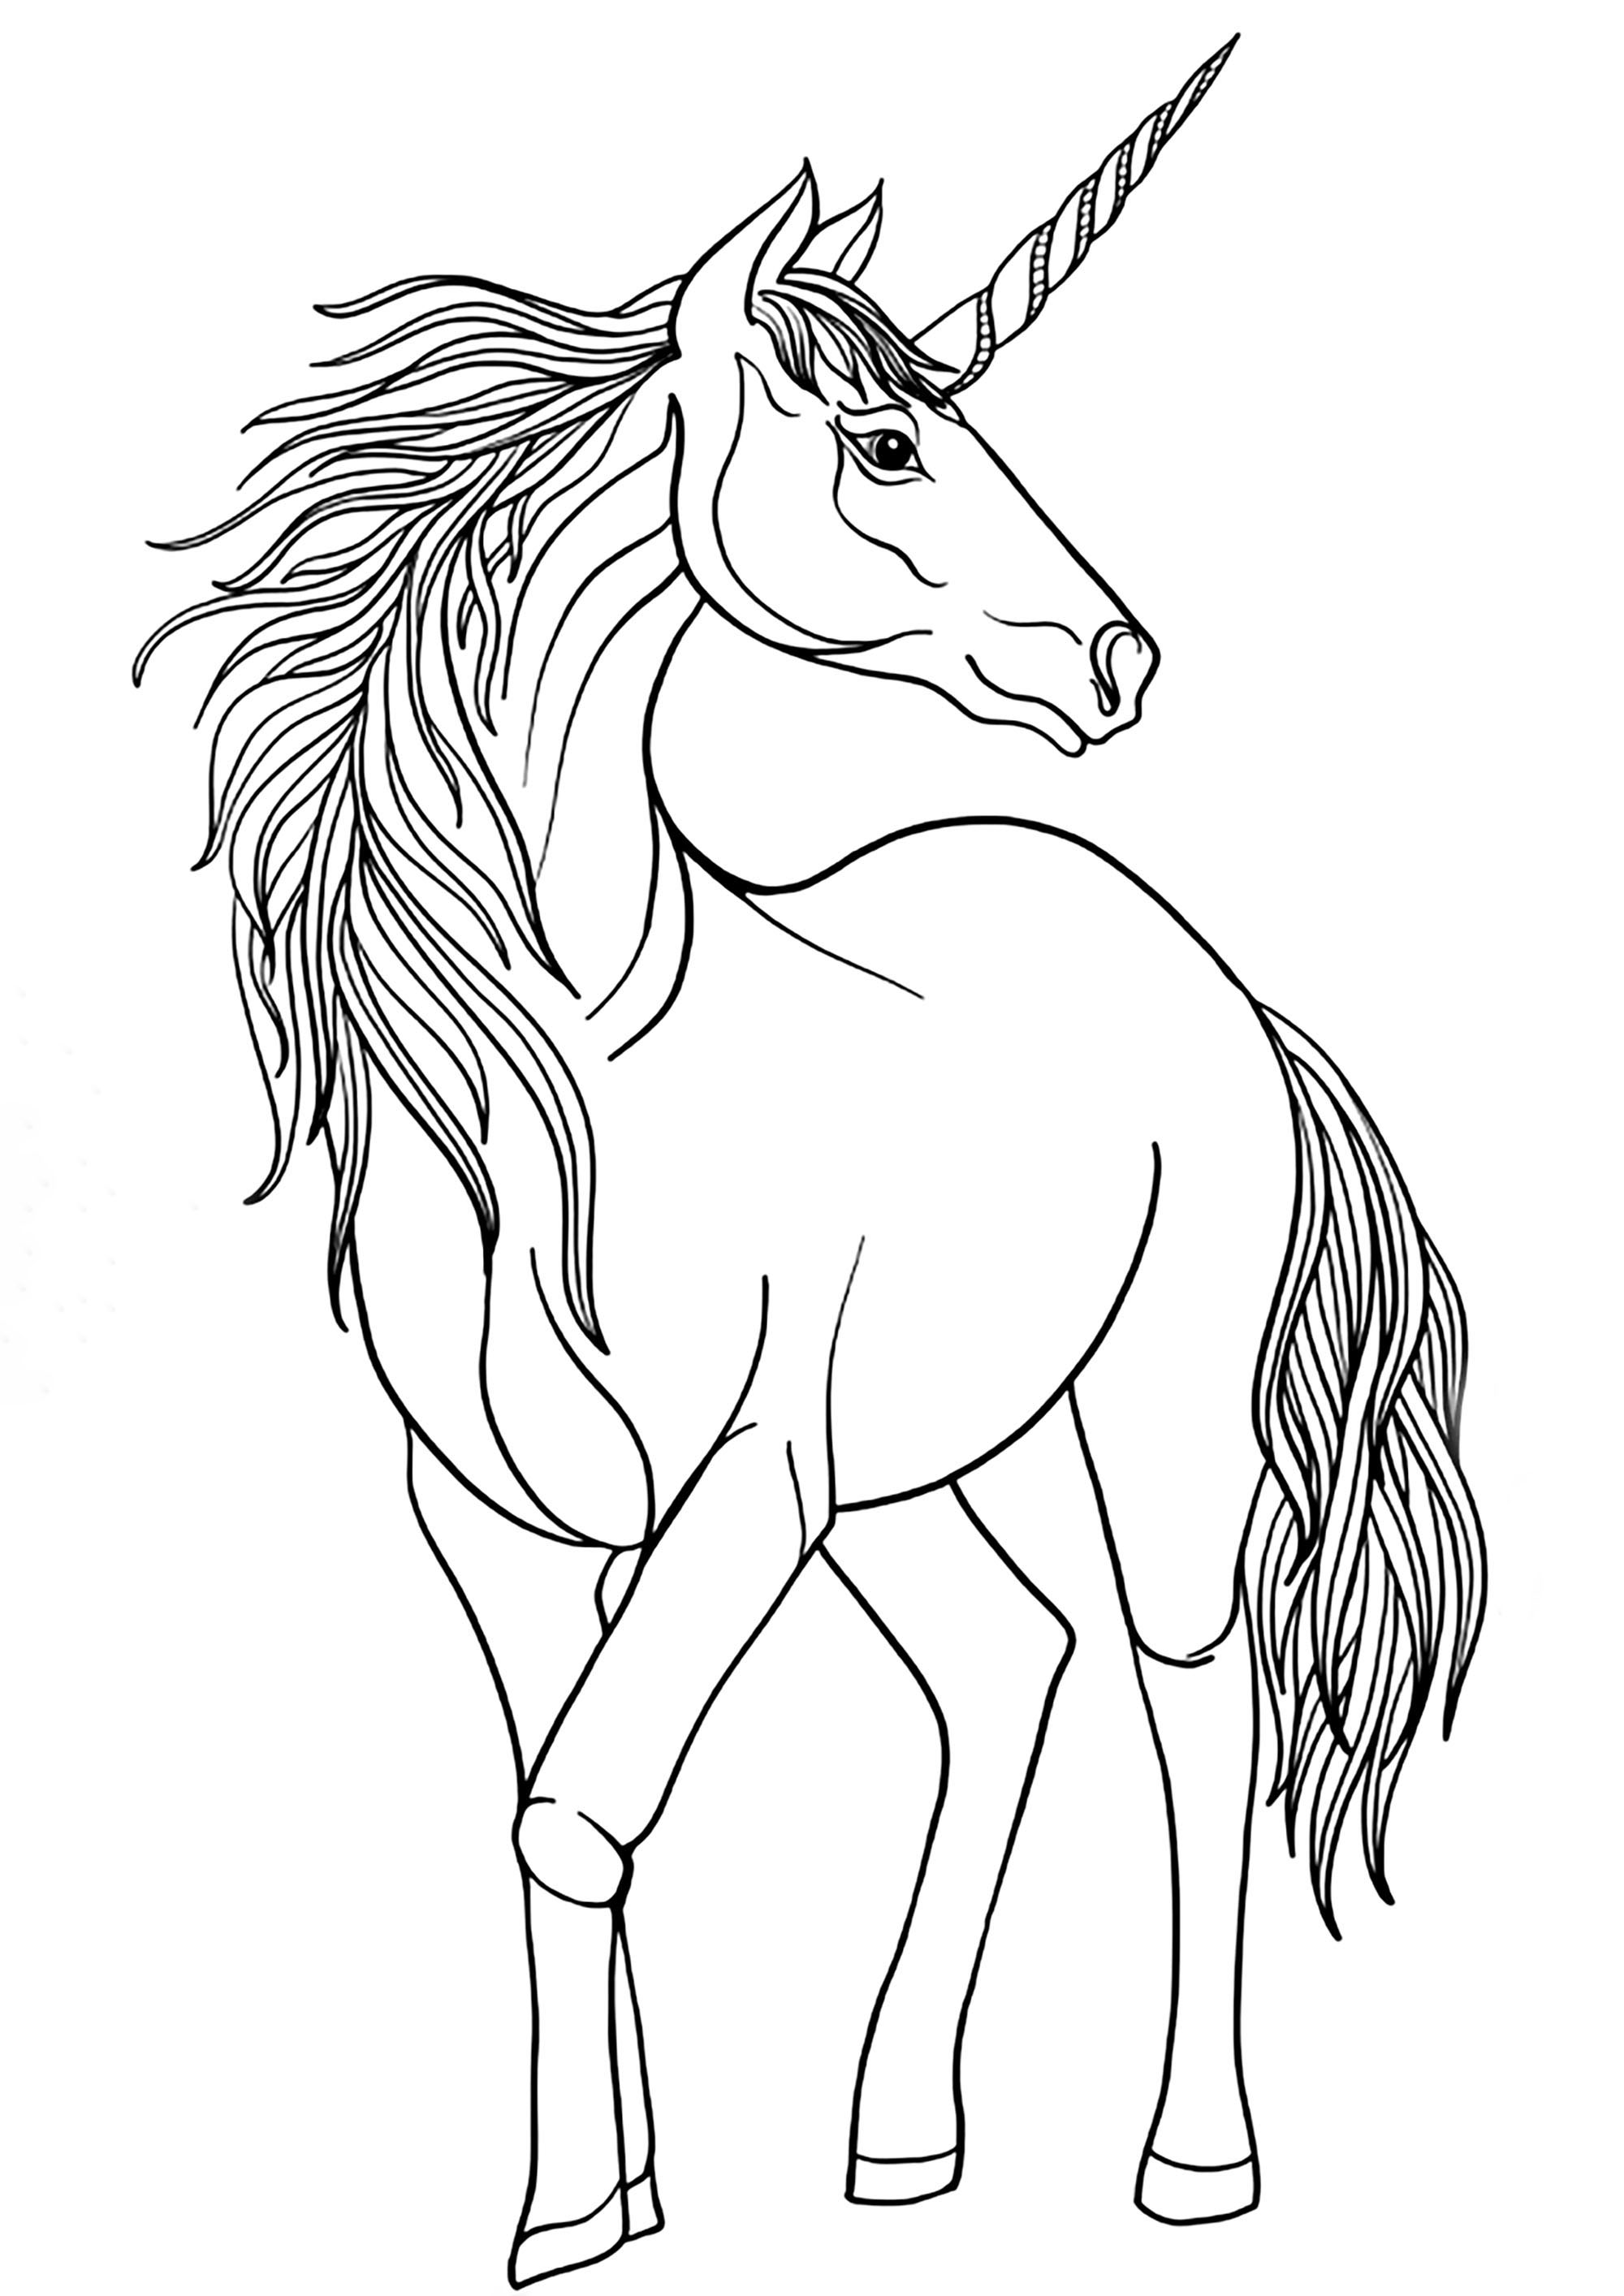 Gran unicornio majestuoso, Origen : 123rf   Artista : Helenlane